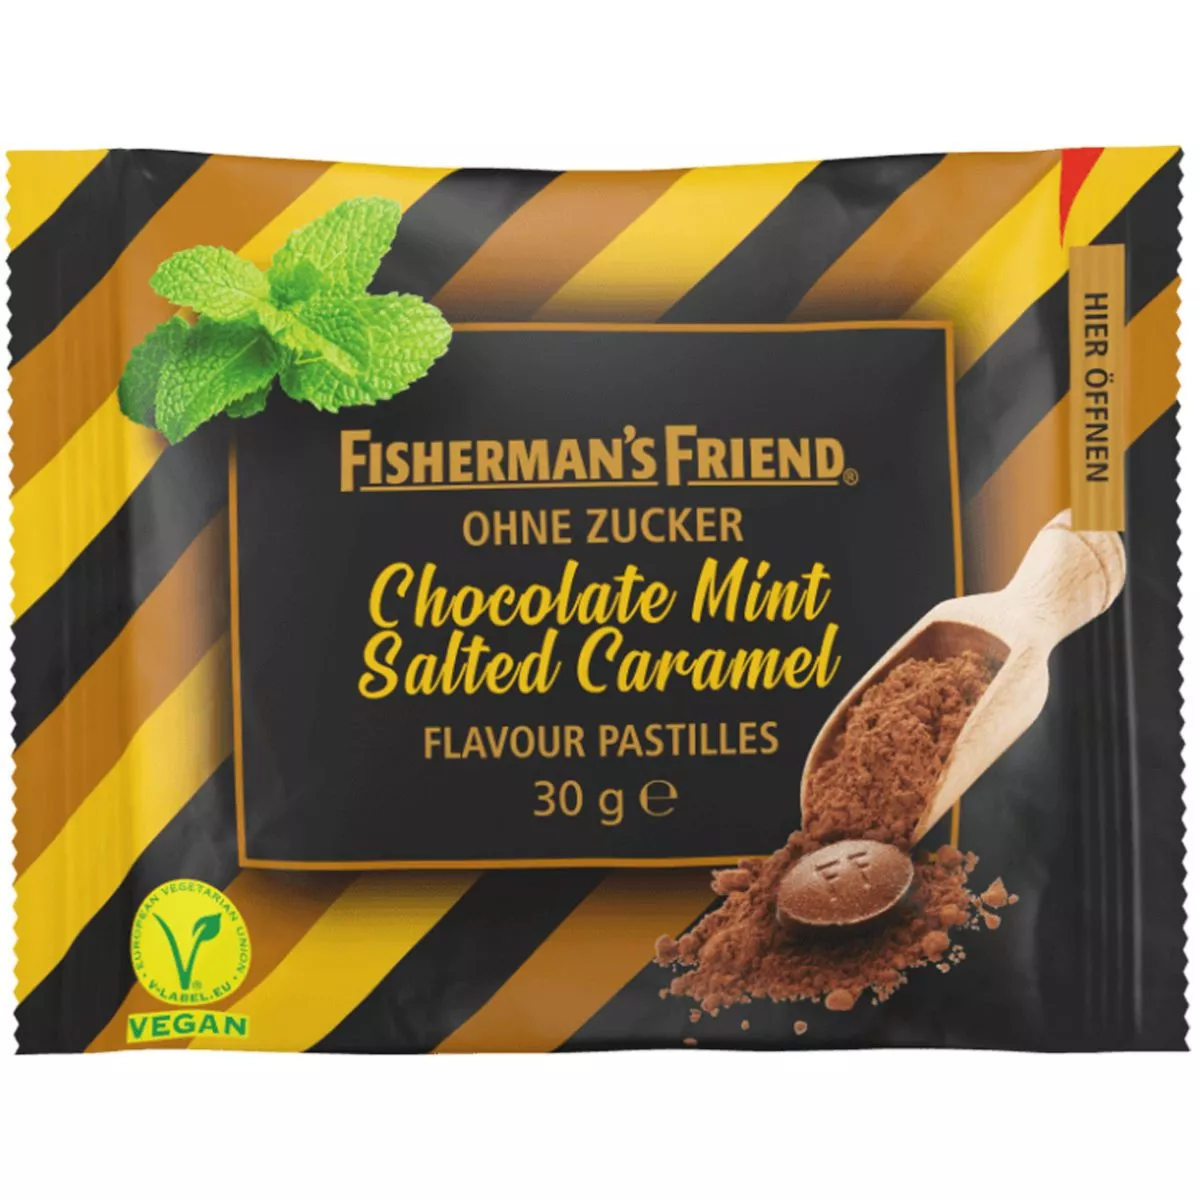 Fisherman's Friend Chocolate Mint Salted Caramel ohne Zucker (25g) 1